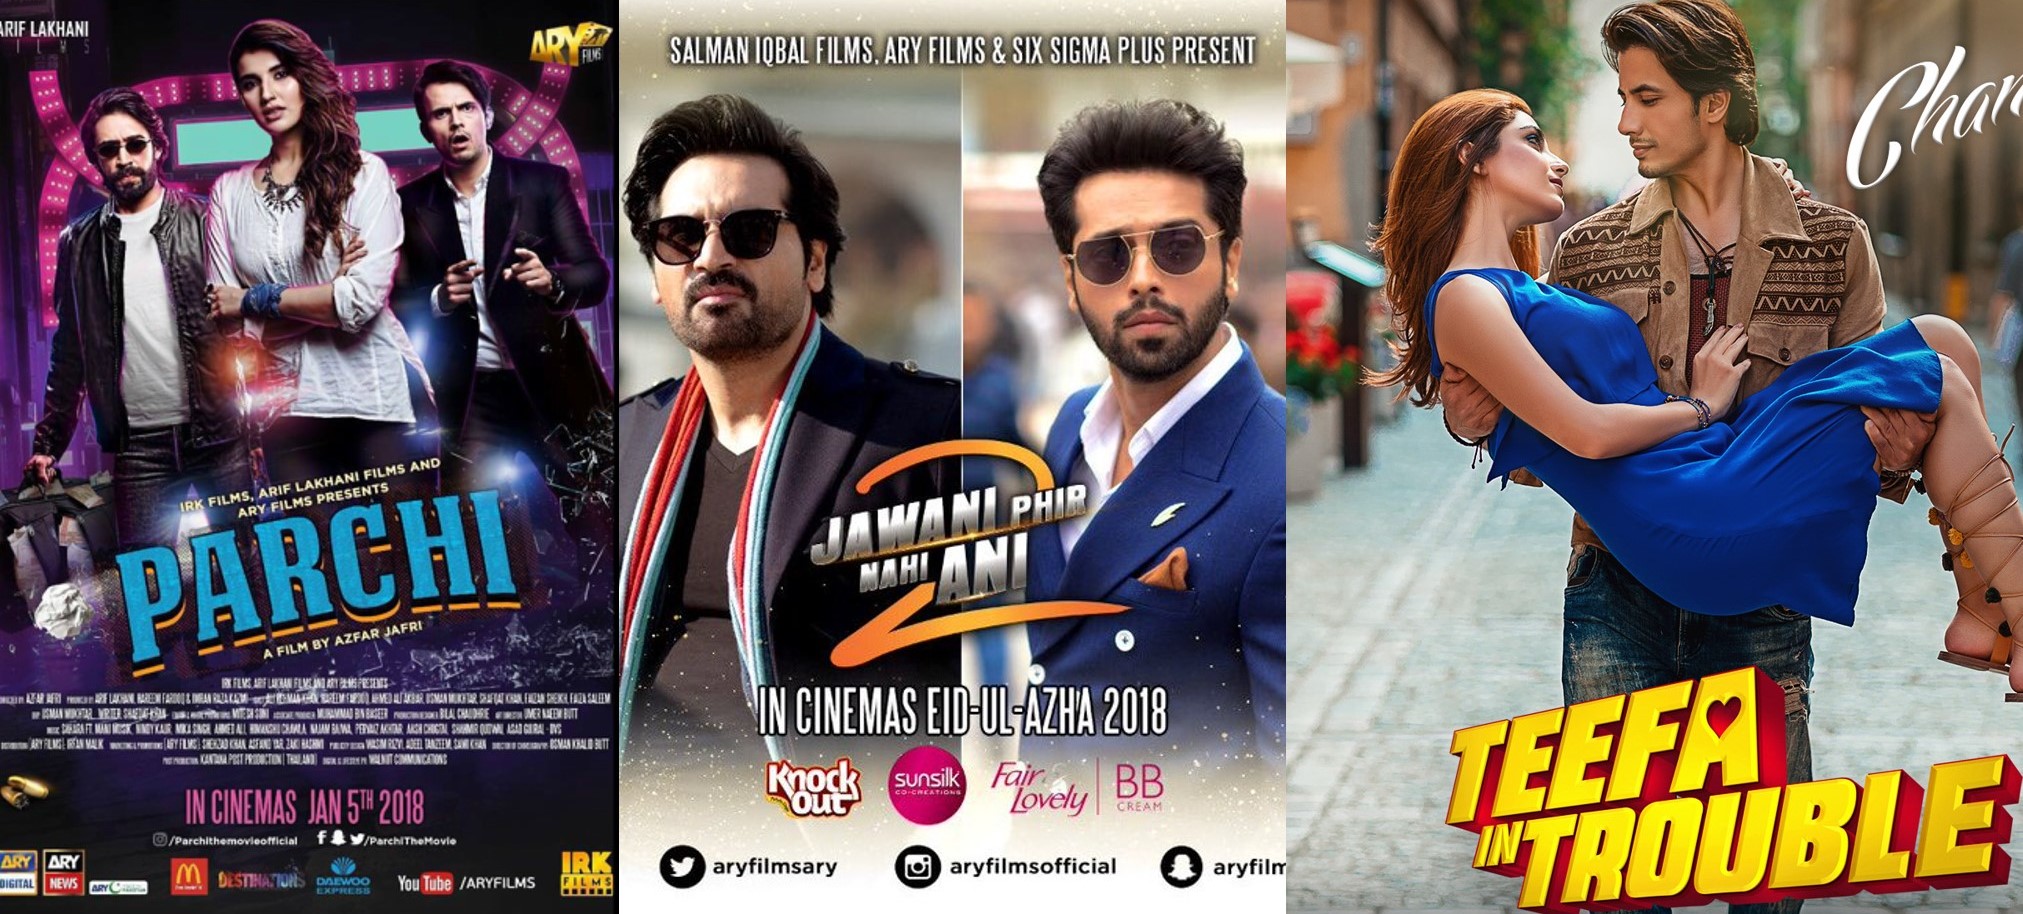 HIghest grossing pakistani films 2018